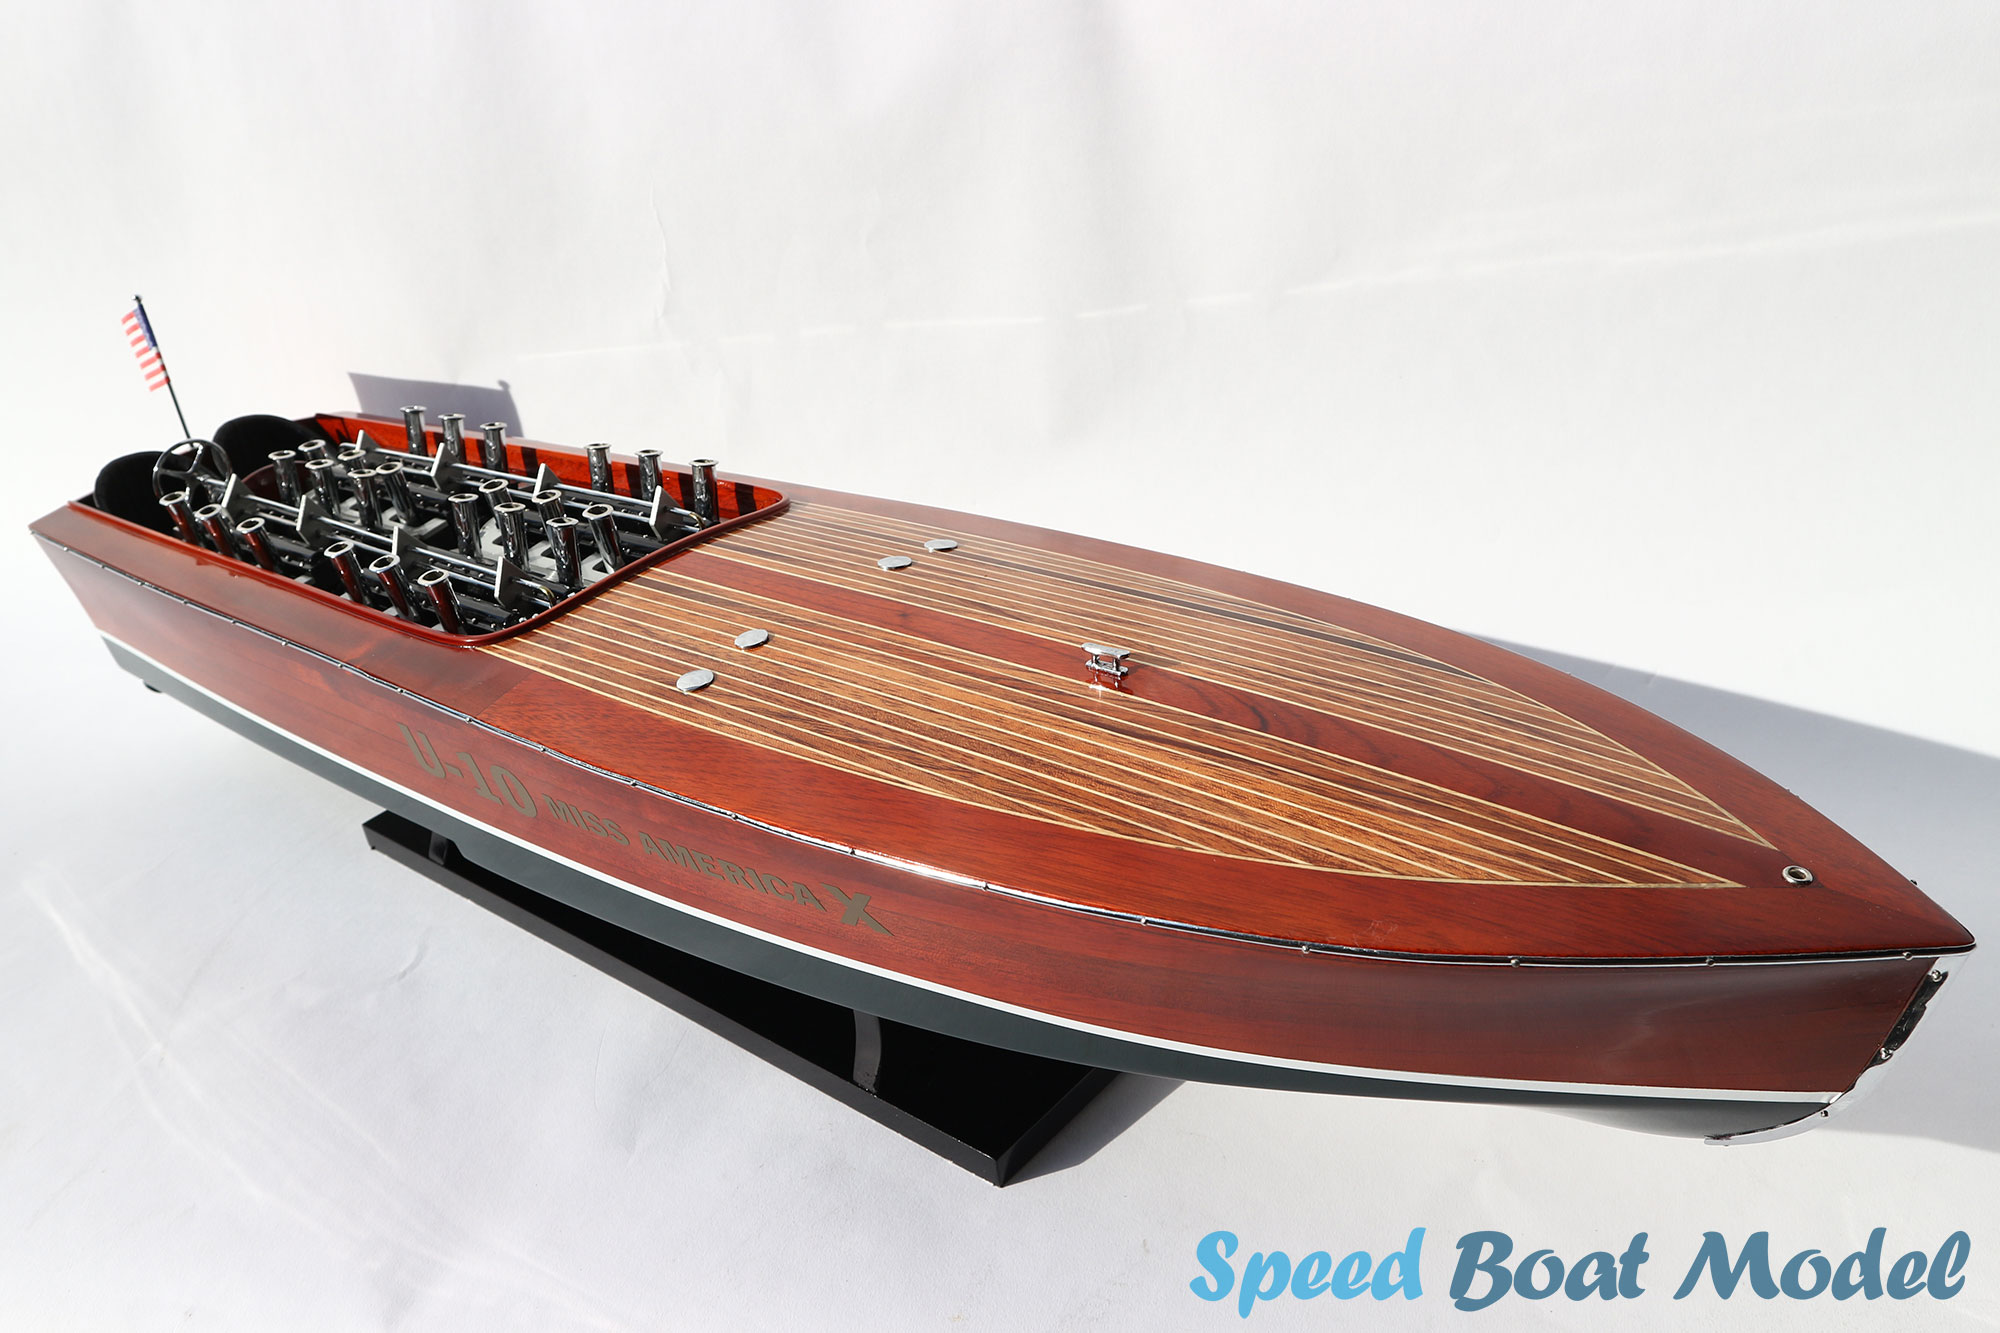 Miss America X Speed Boat Model 32.6"